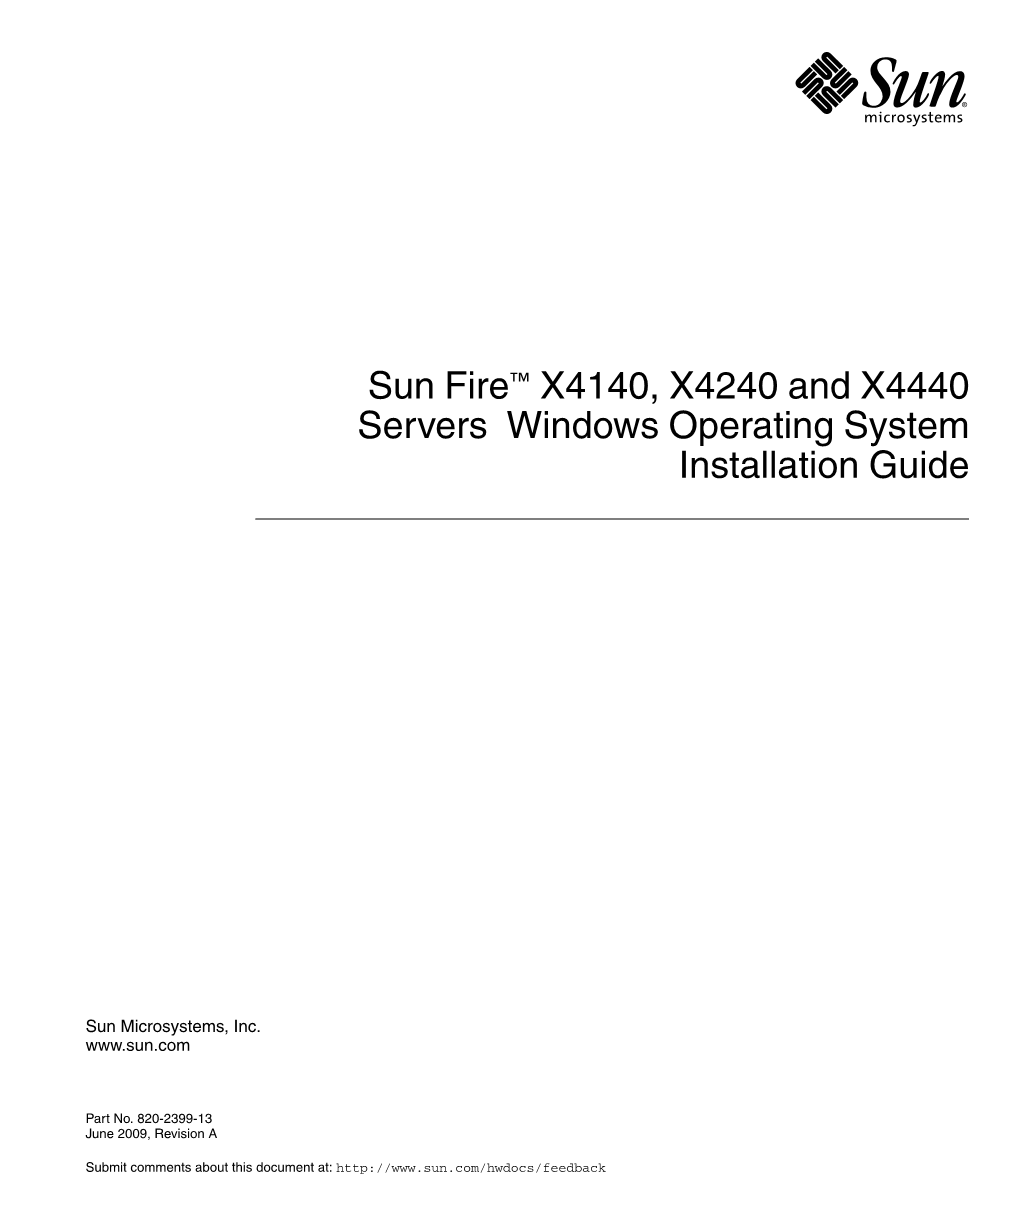 Sun Fire X4140, X4240 and X4440 Servers Windows Operating System